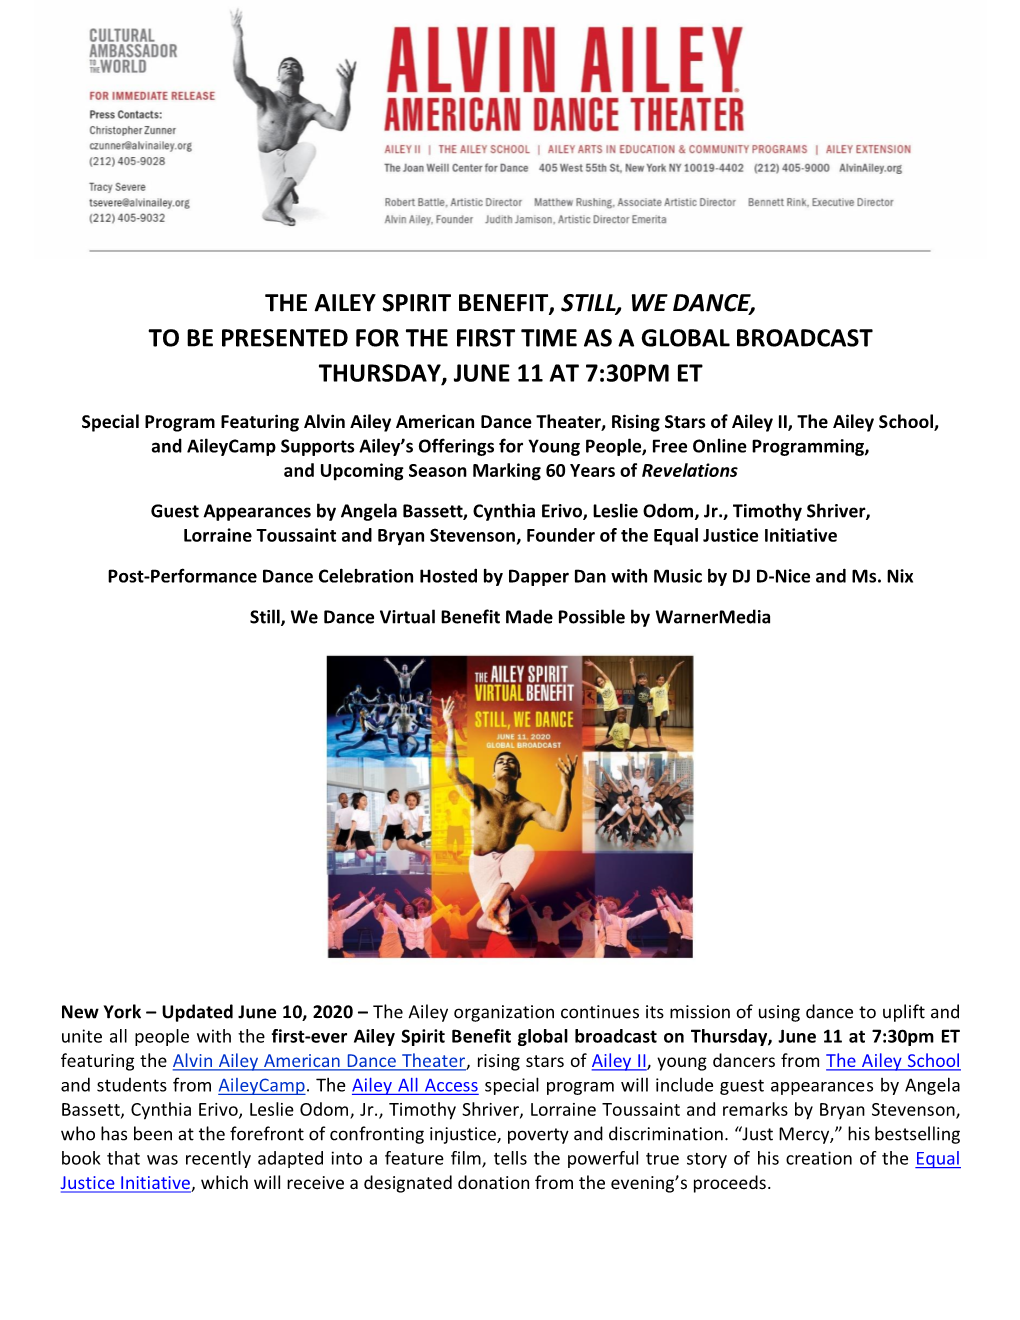 Ailey Spirit Benefit Global Broadcast